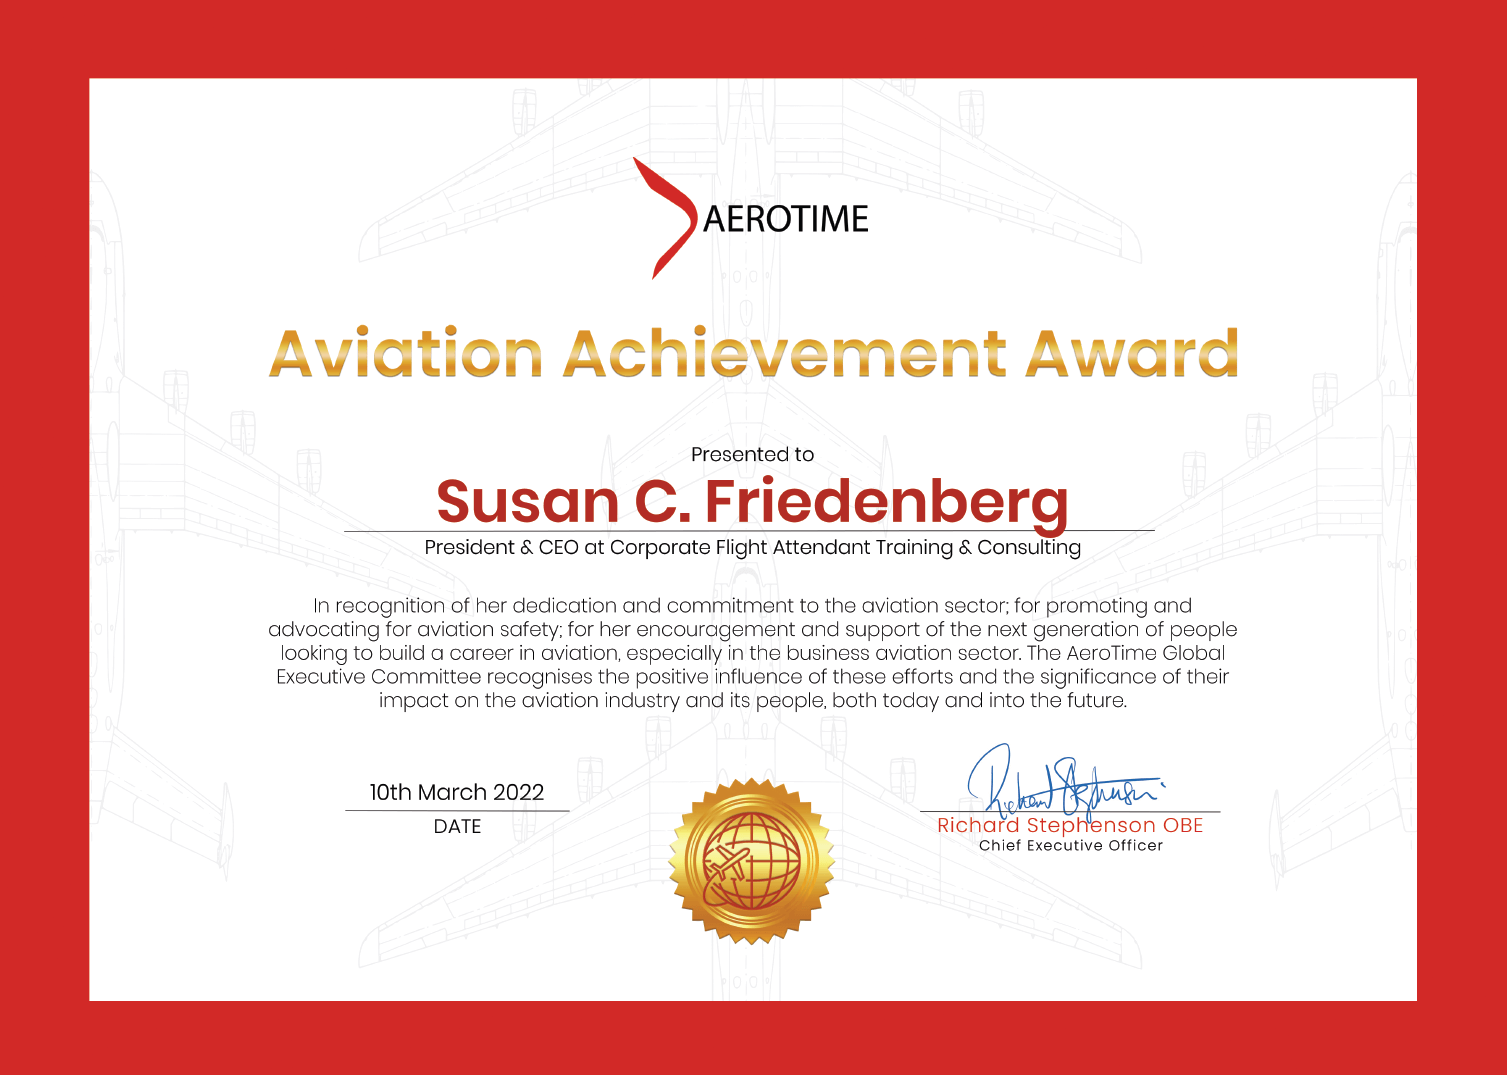 Susan C. Friedenberg, AeroTime Aviation Achievement Award